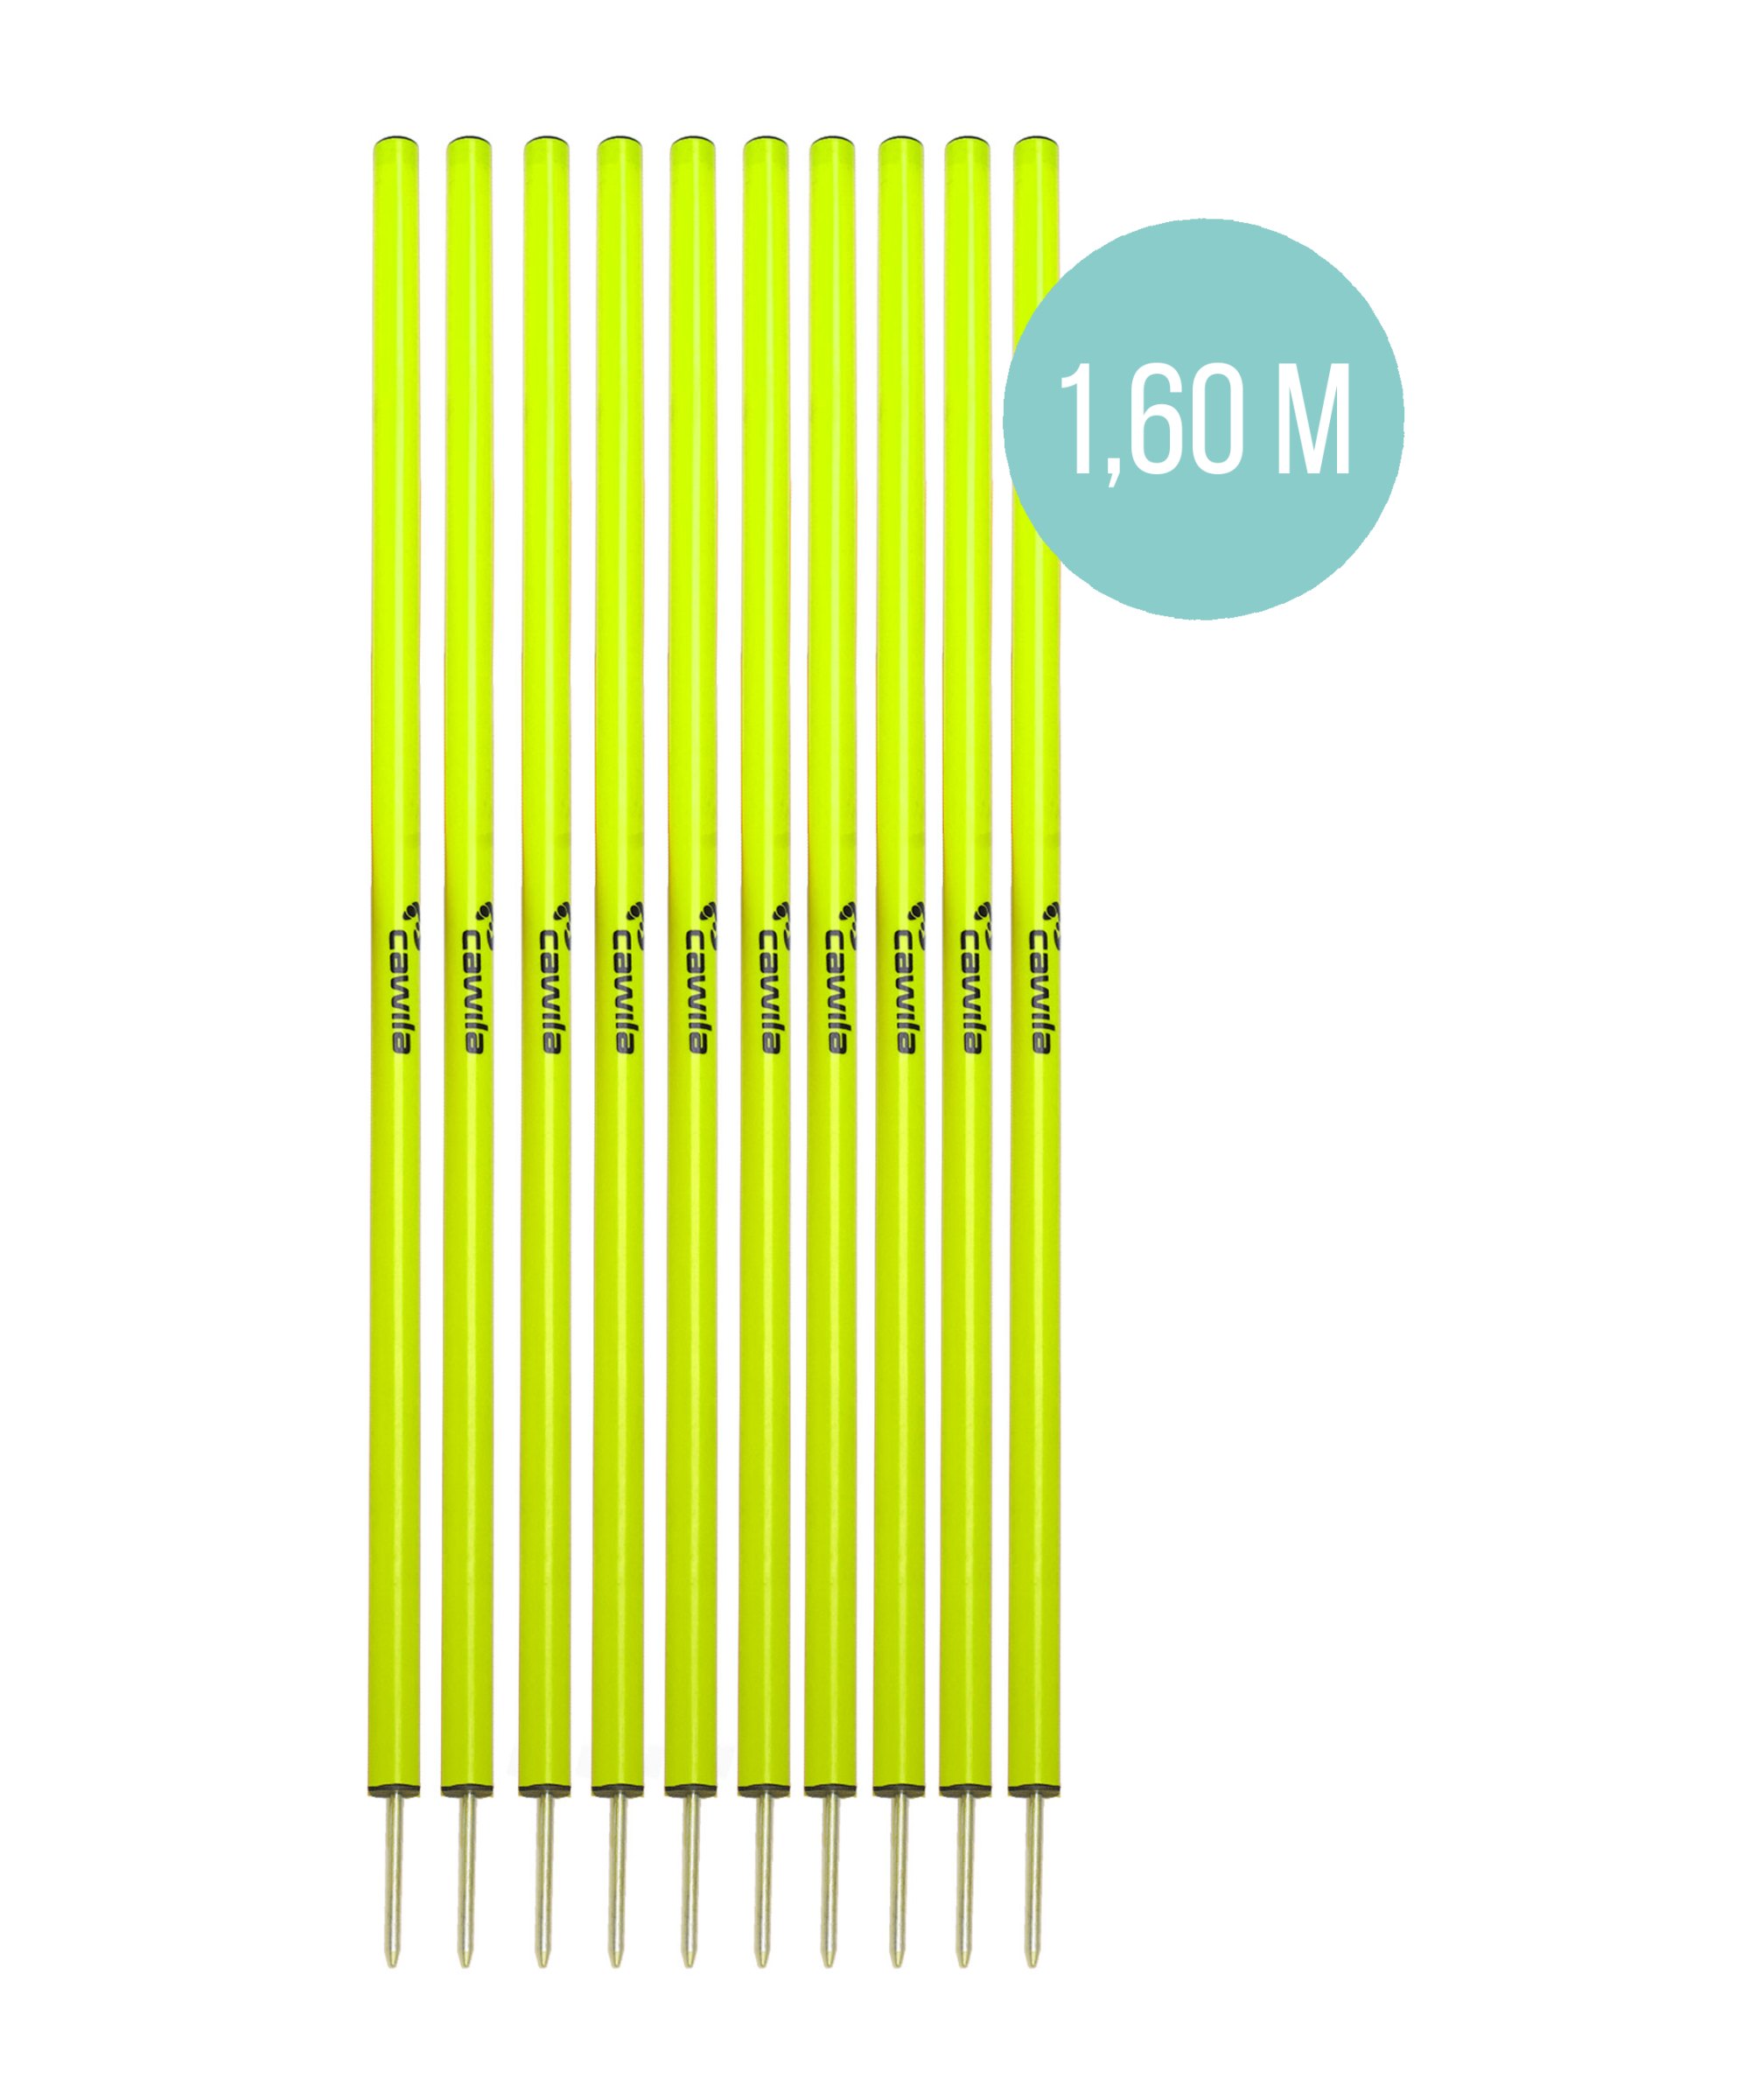 Cawila Slalomstange L (Ø 33 mm, 1,6m) Neongelb - gelb